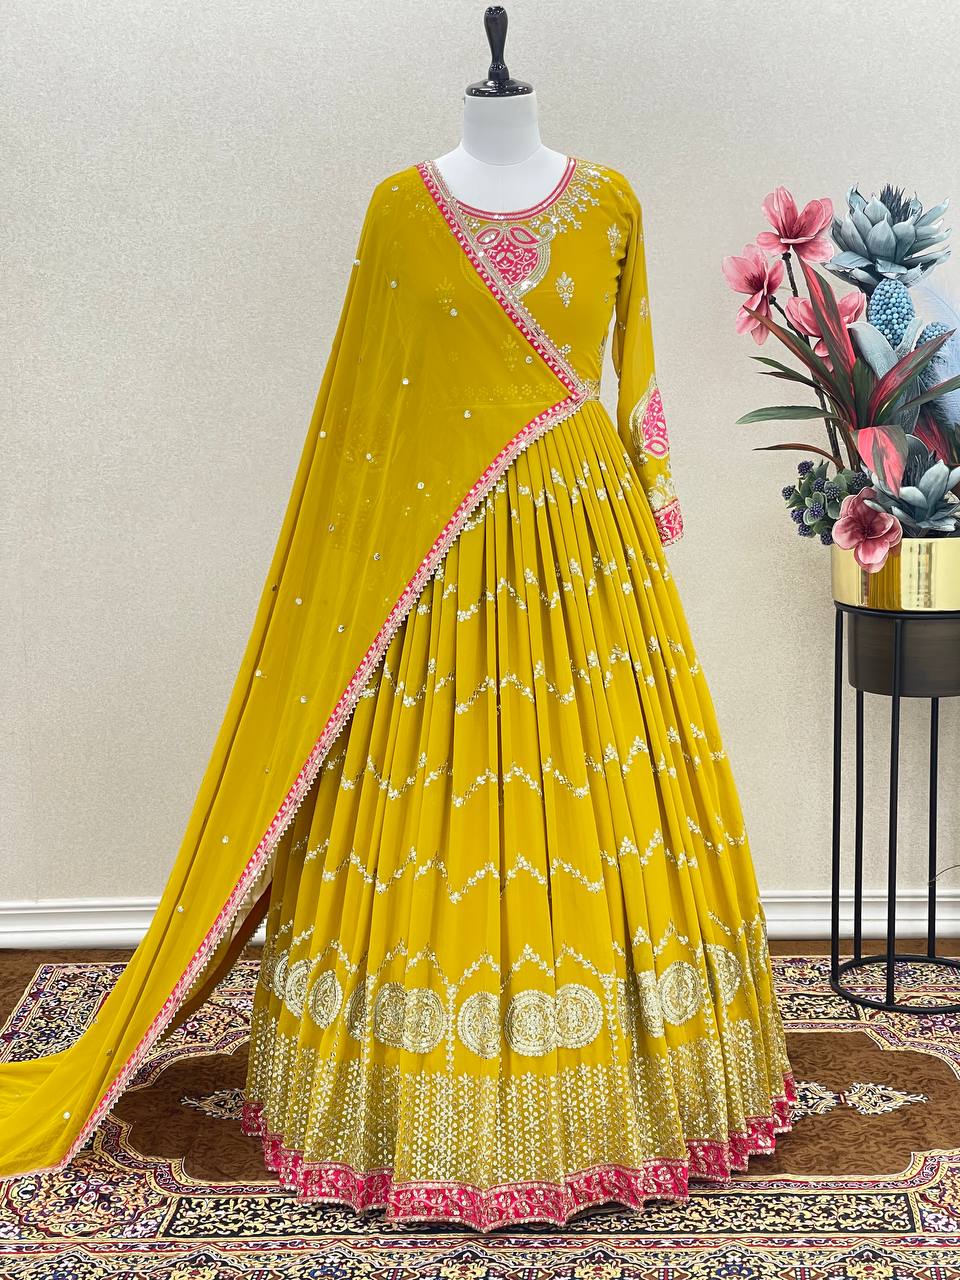 💛 yellow colour dress designs|| yellow colour suit|haldi ceremony outfits ||#yellowdress #haldidress - YouTube